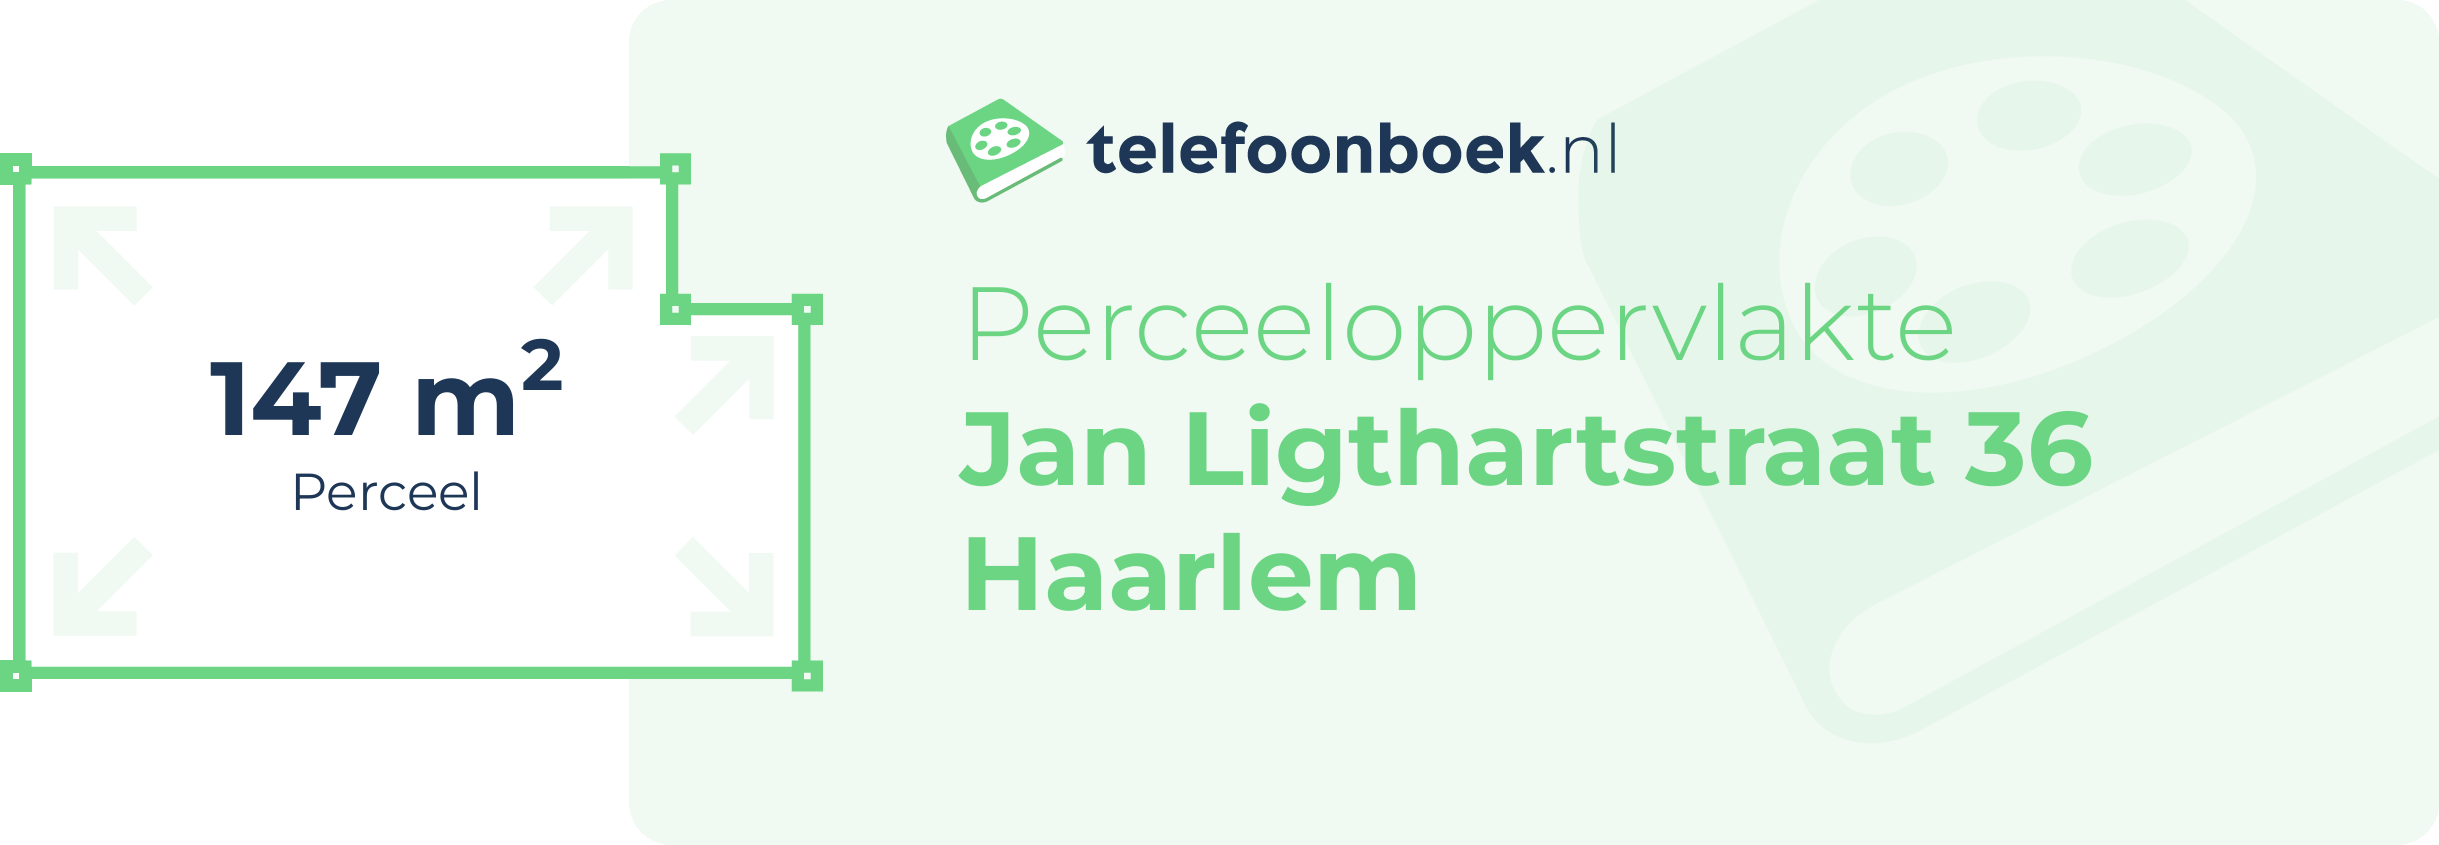 Perceeloppervlakte Jan Ligthartstraat 36 Haarlem